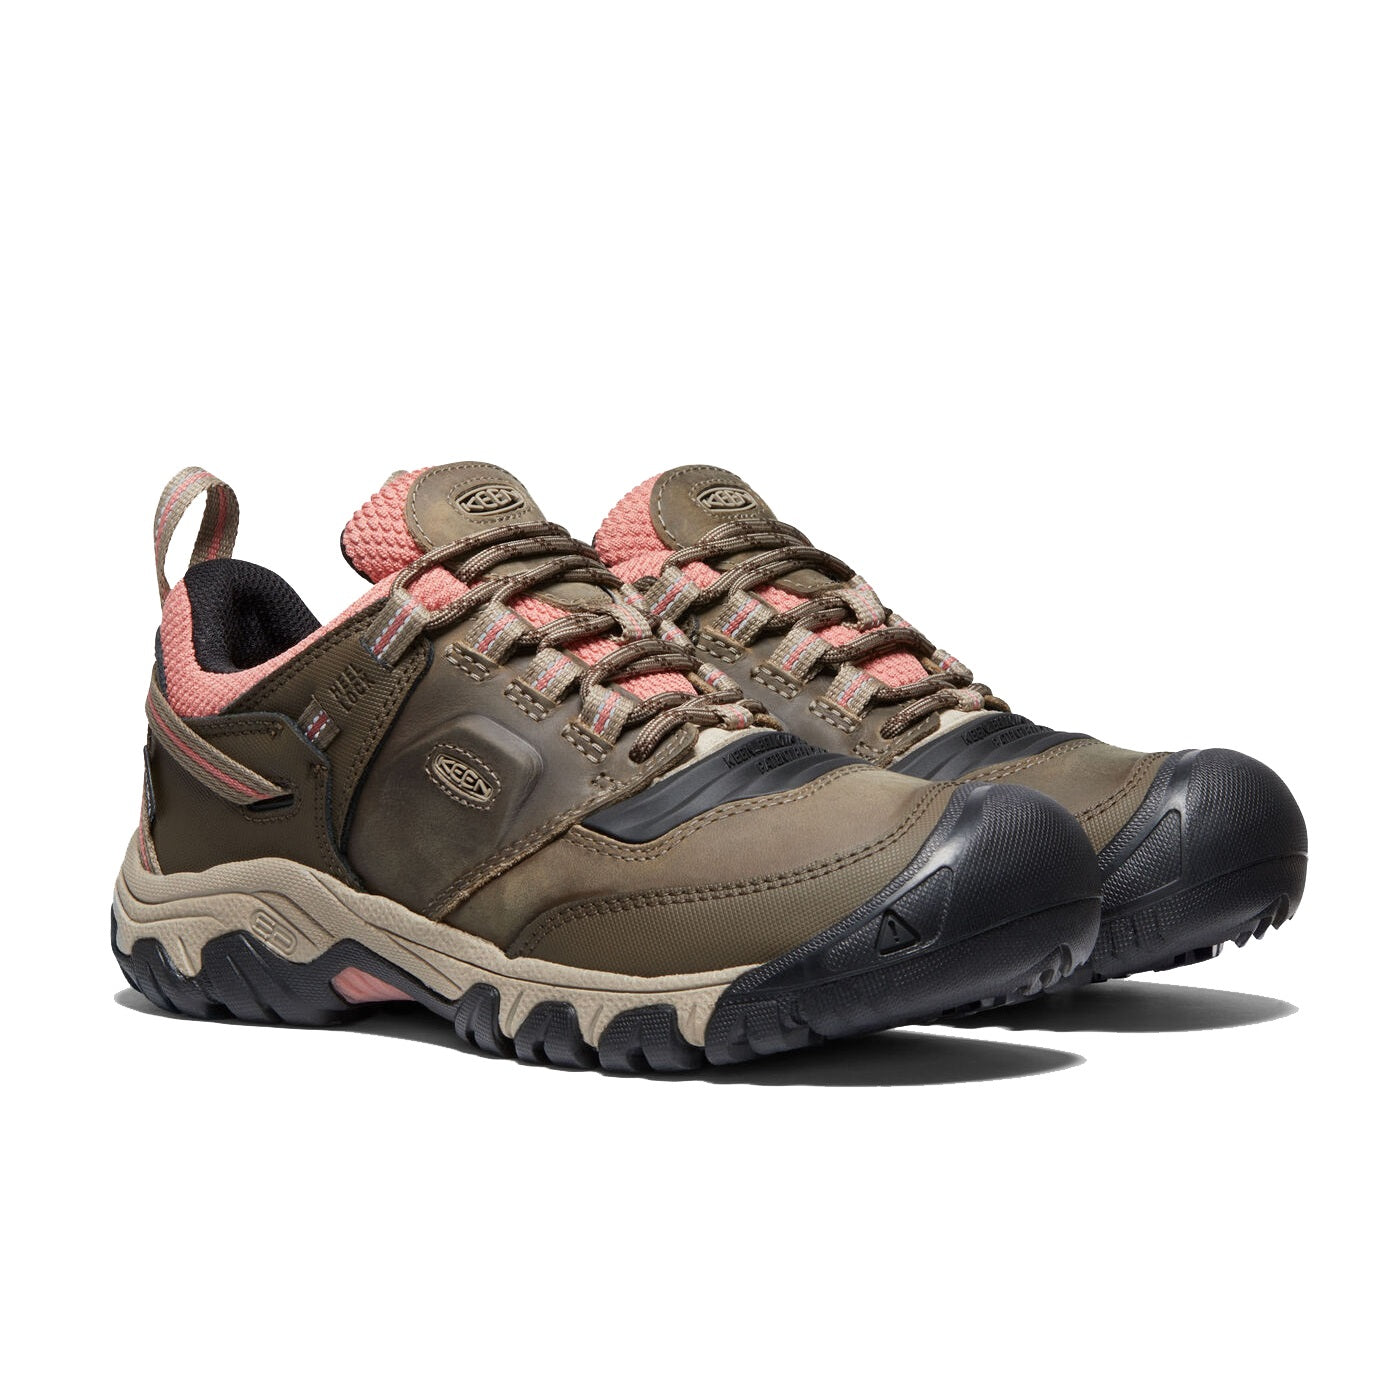 keen ridge flex waterproof shoe women timberwolf brown pair